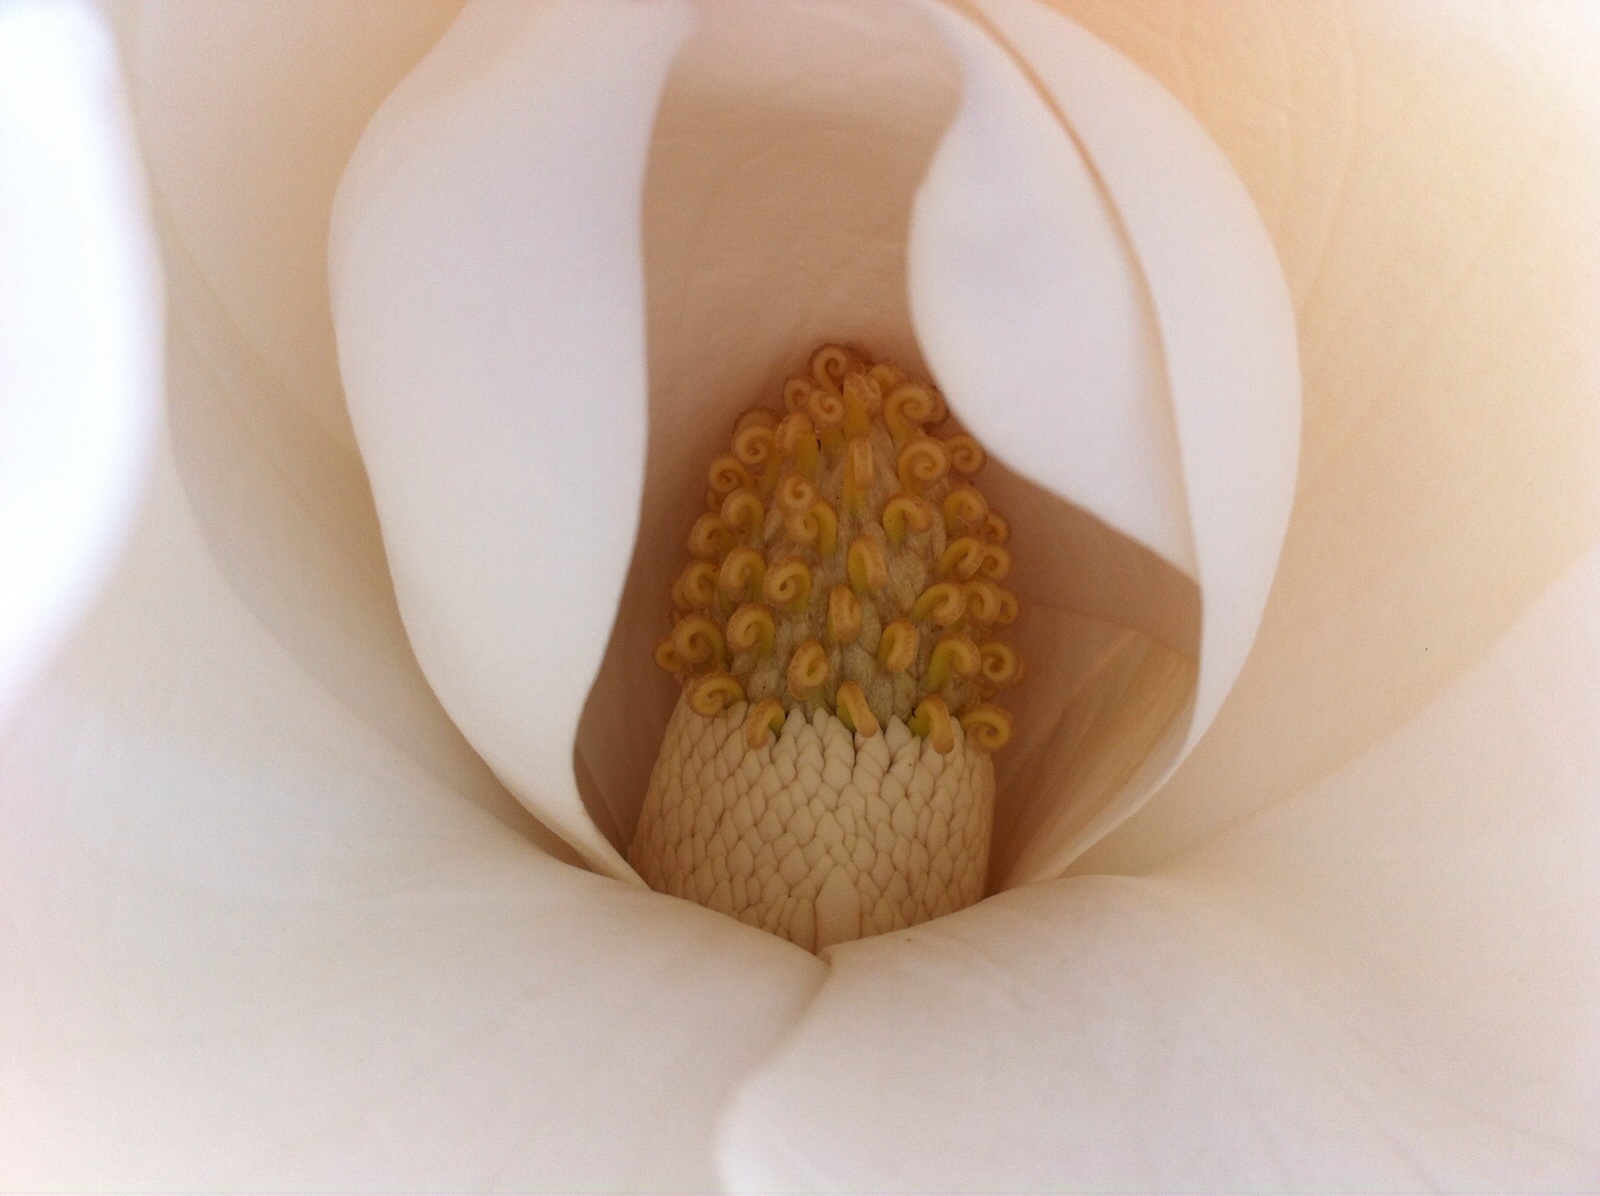 Heart of magnolia...